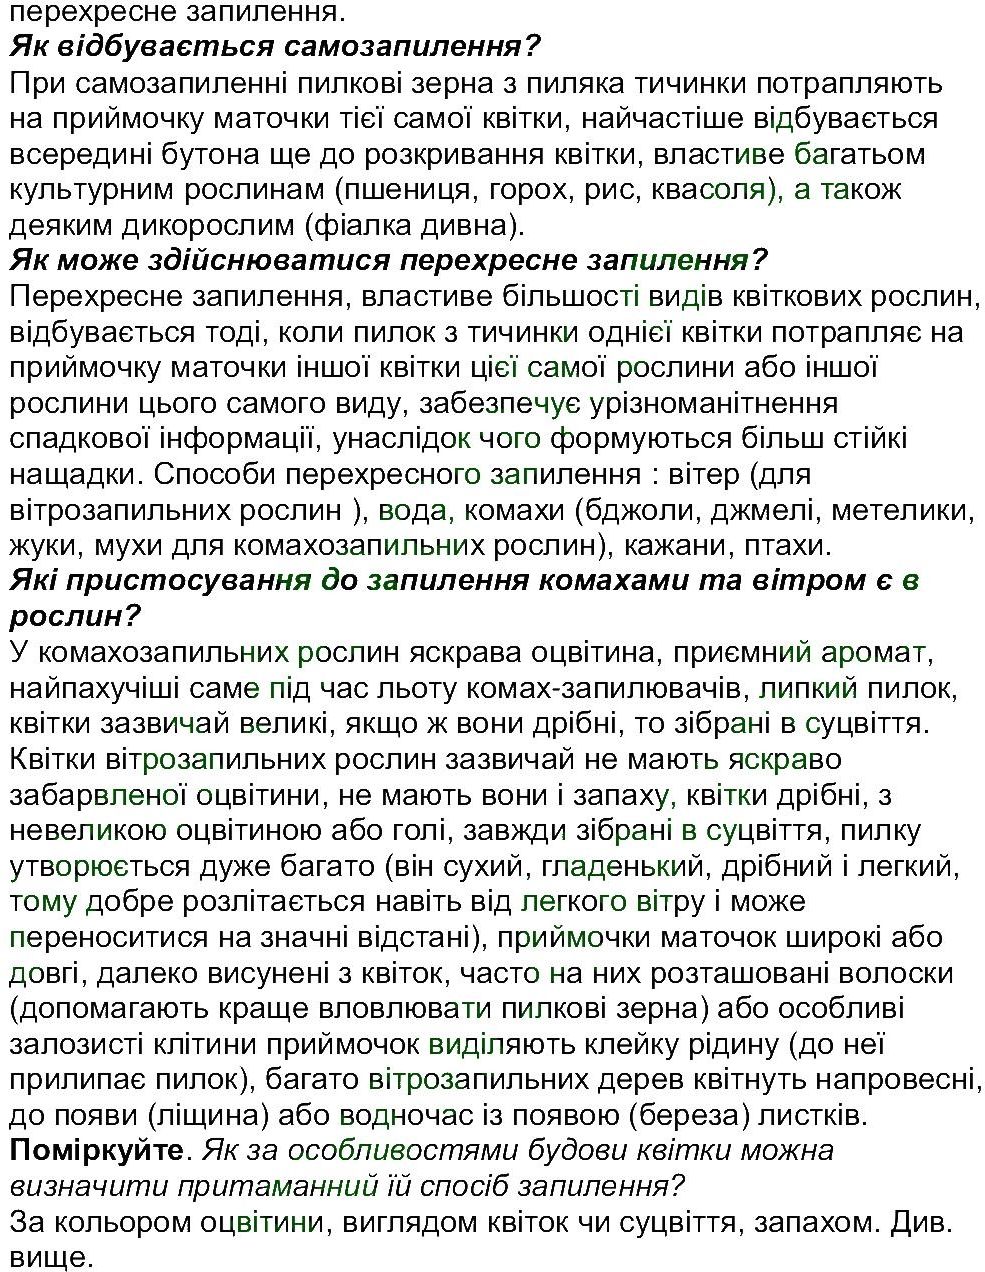 6-biologiya-li-ostapchenko-pg-balan-nyu-matyash-2016--tema-3-roslini-ст131-134-rnd6065.jpg